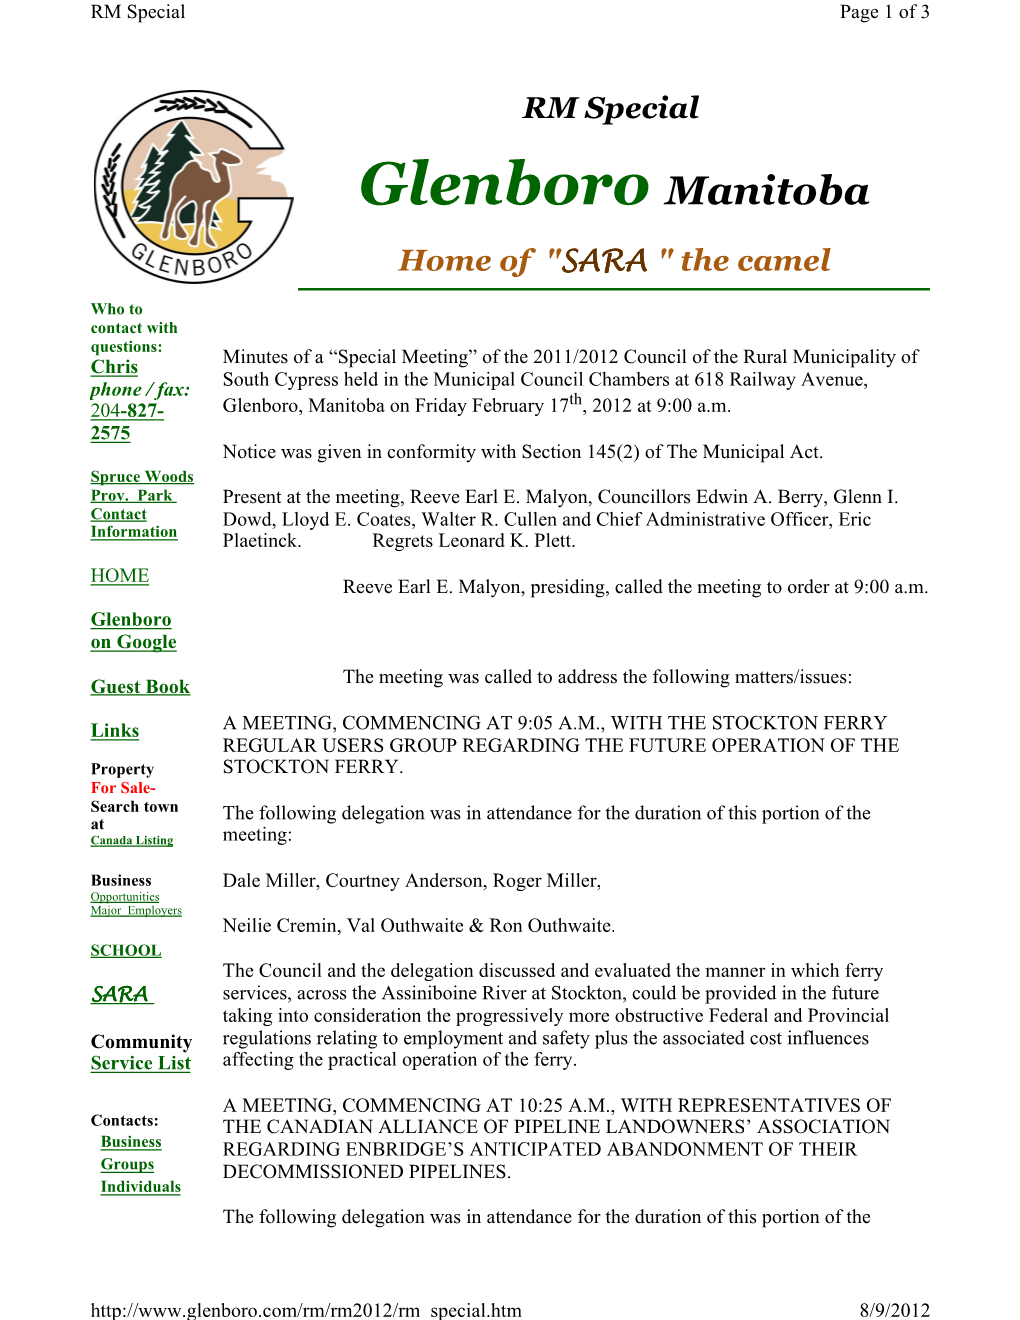 Chris Phone / Fax: 204-827- 2575 HOME Glenboro on Google Guest